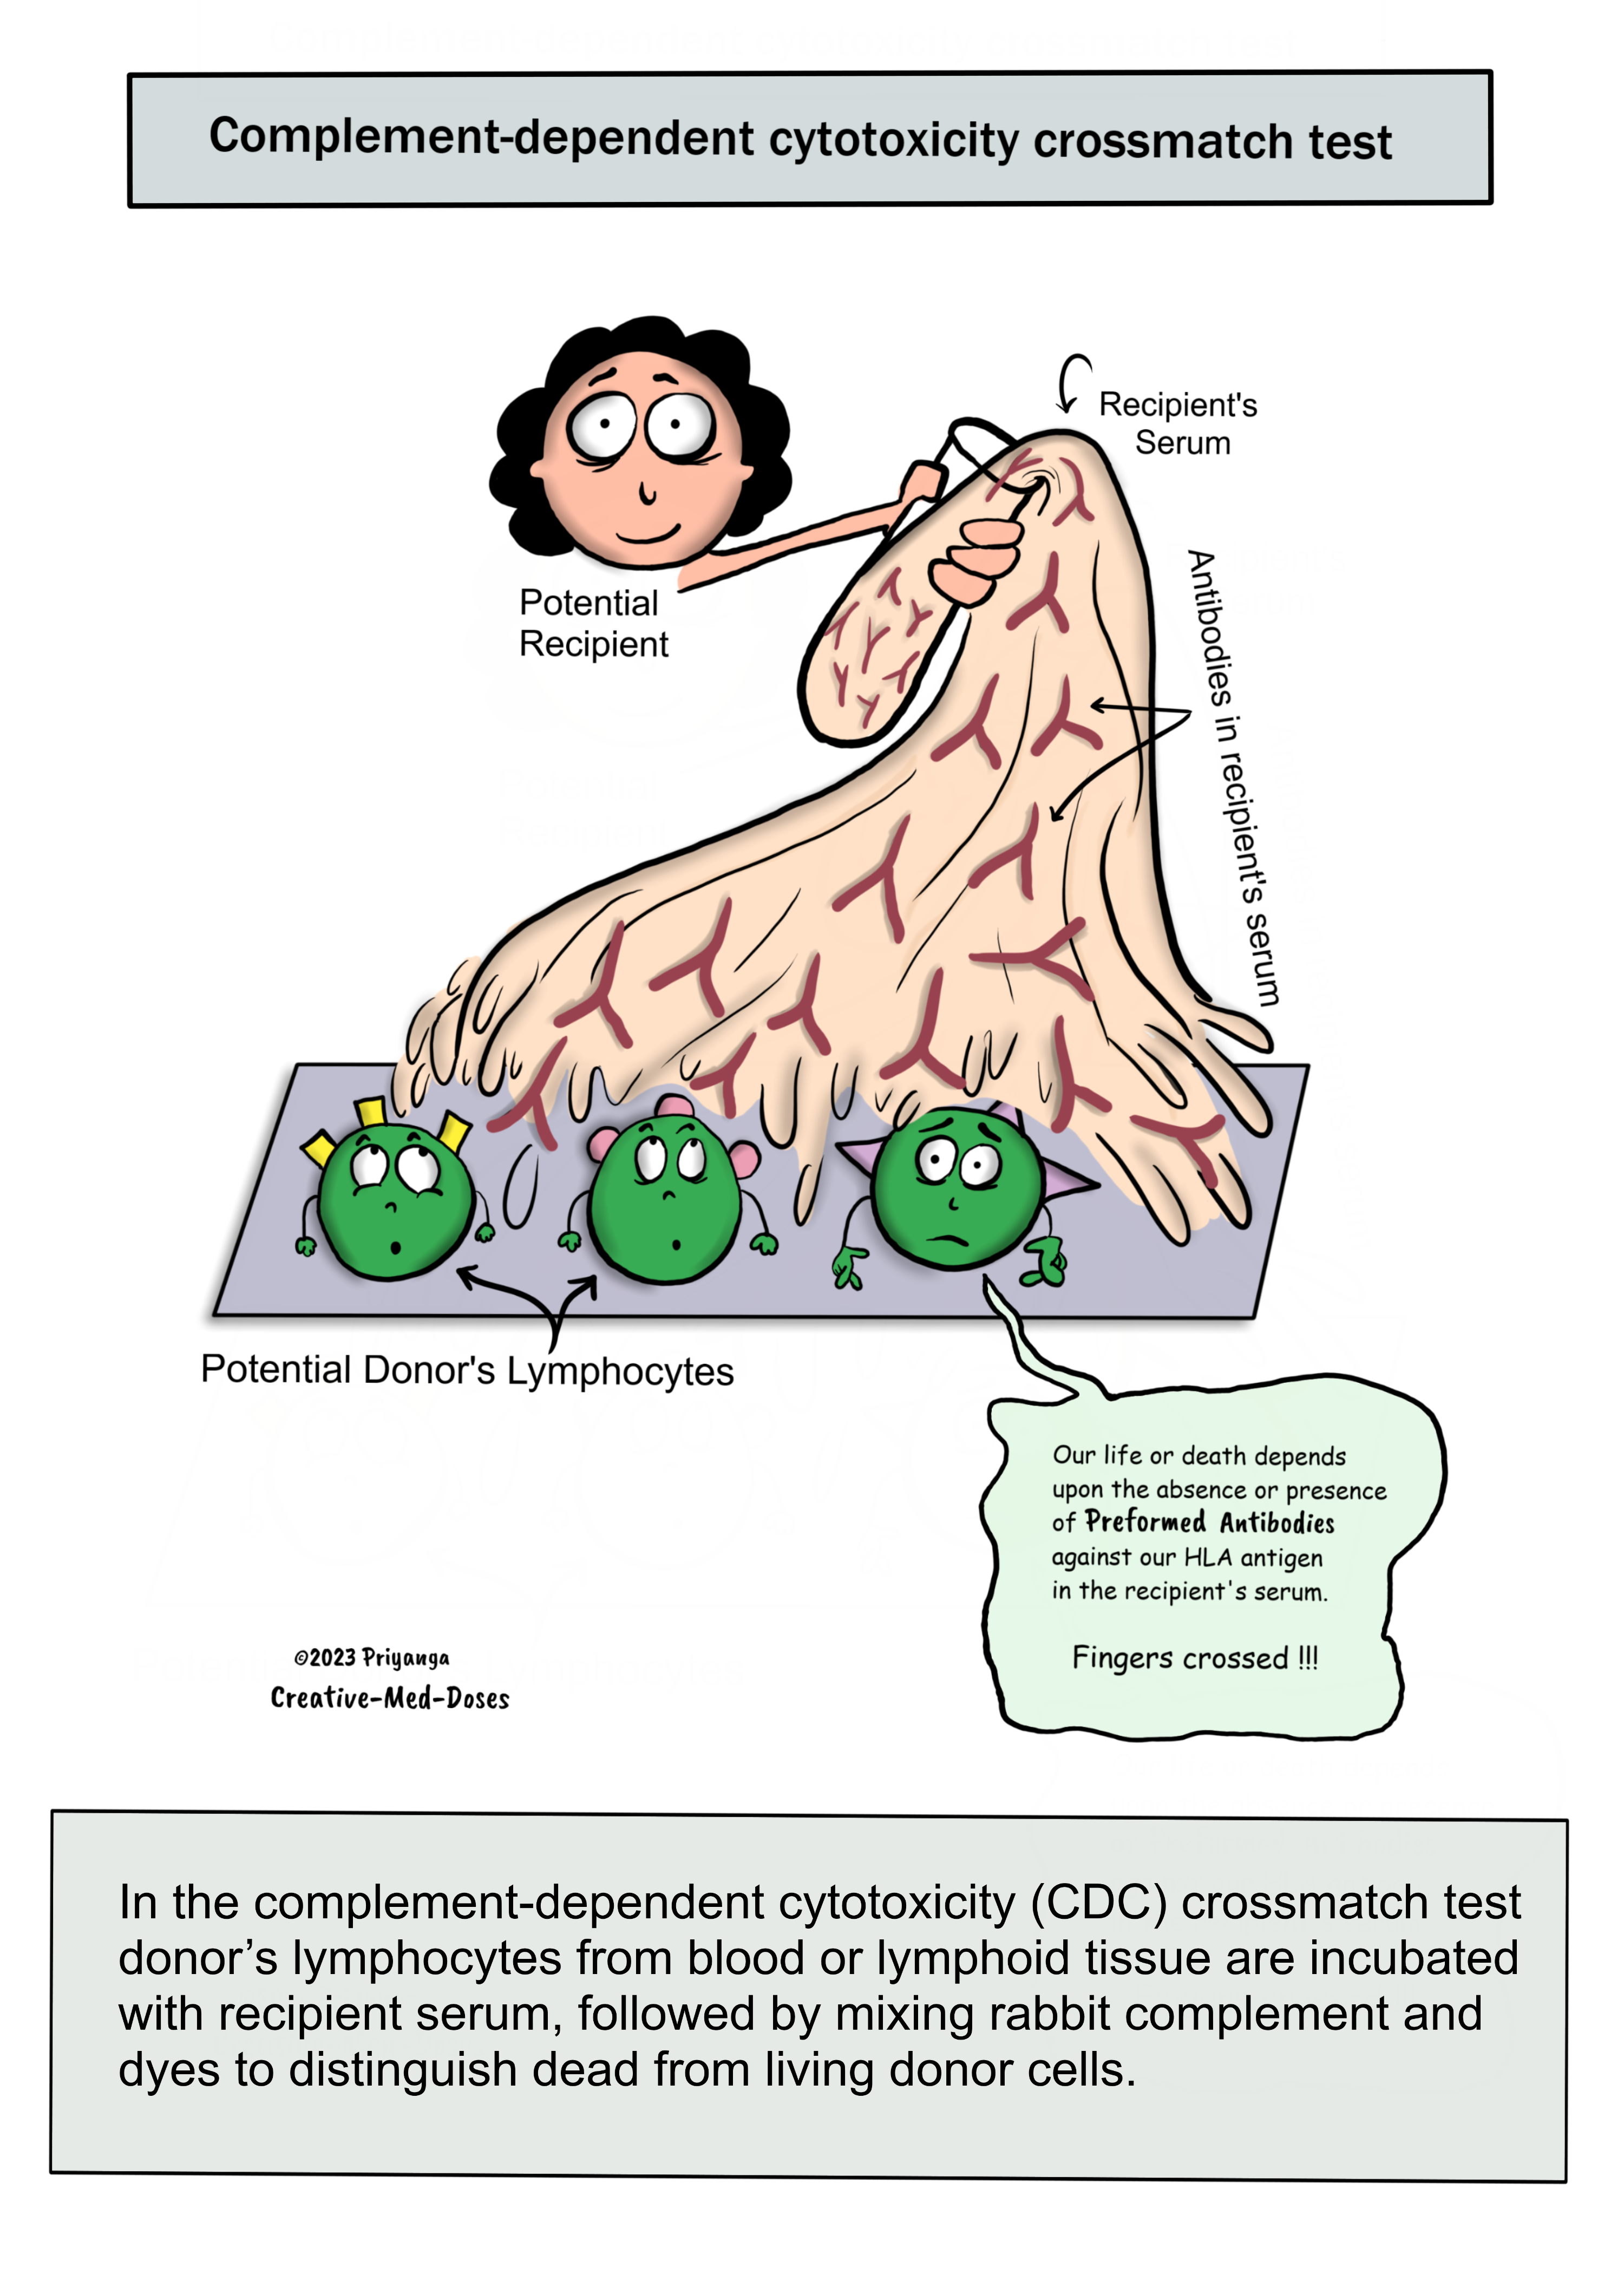 Complement-dependent cytotoxicity (CDC) crossmatch